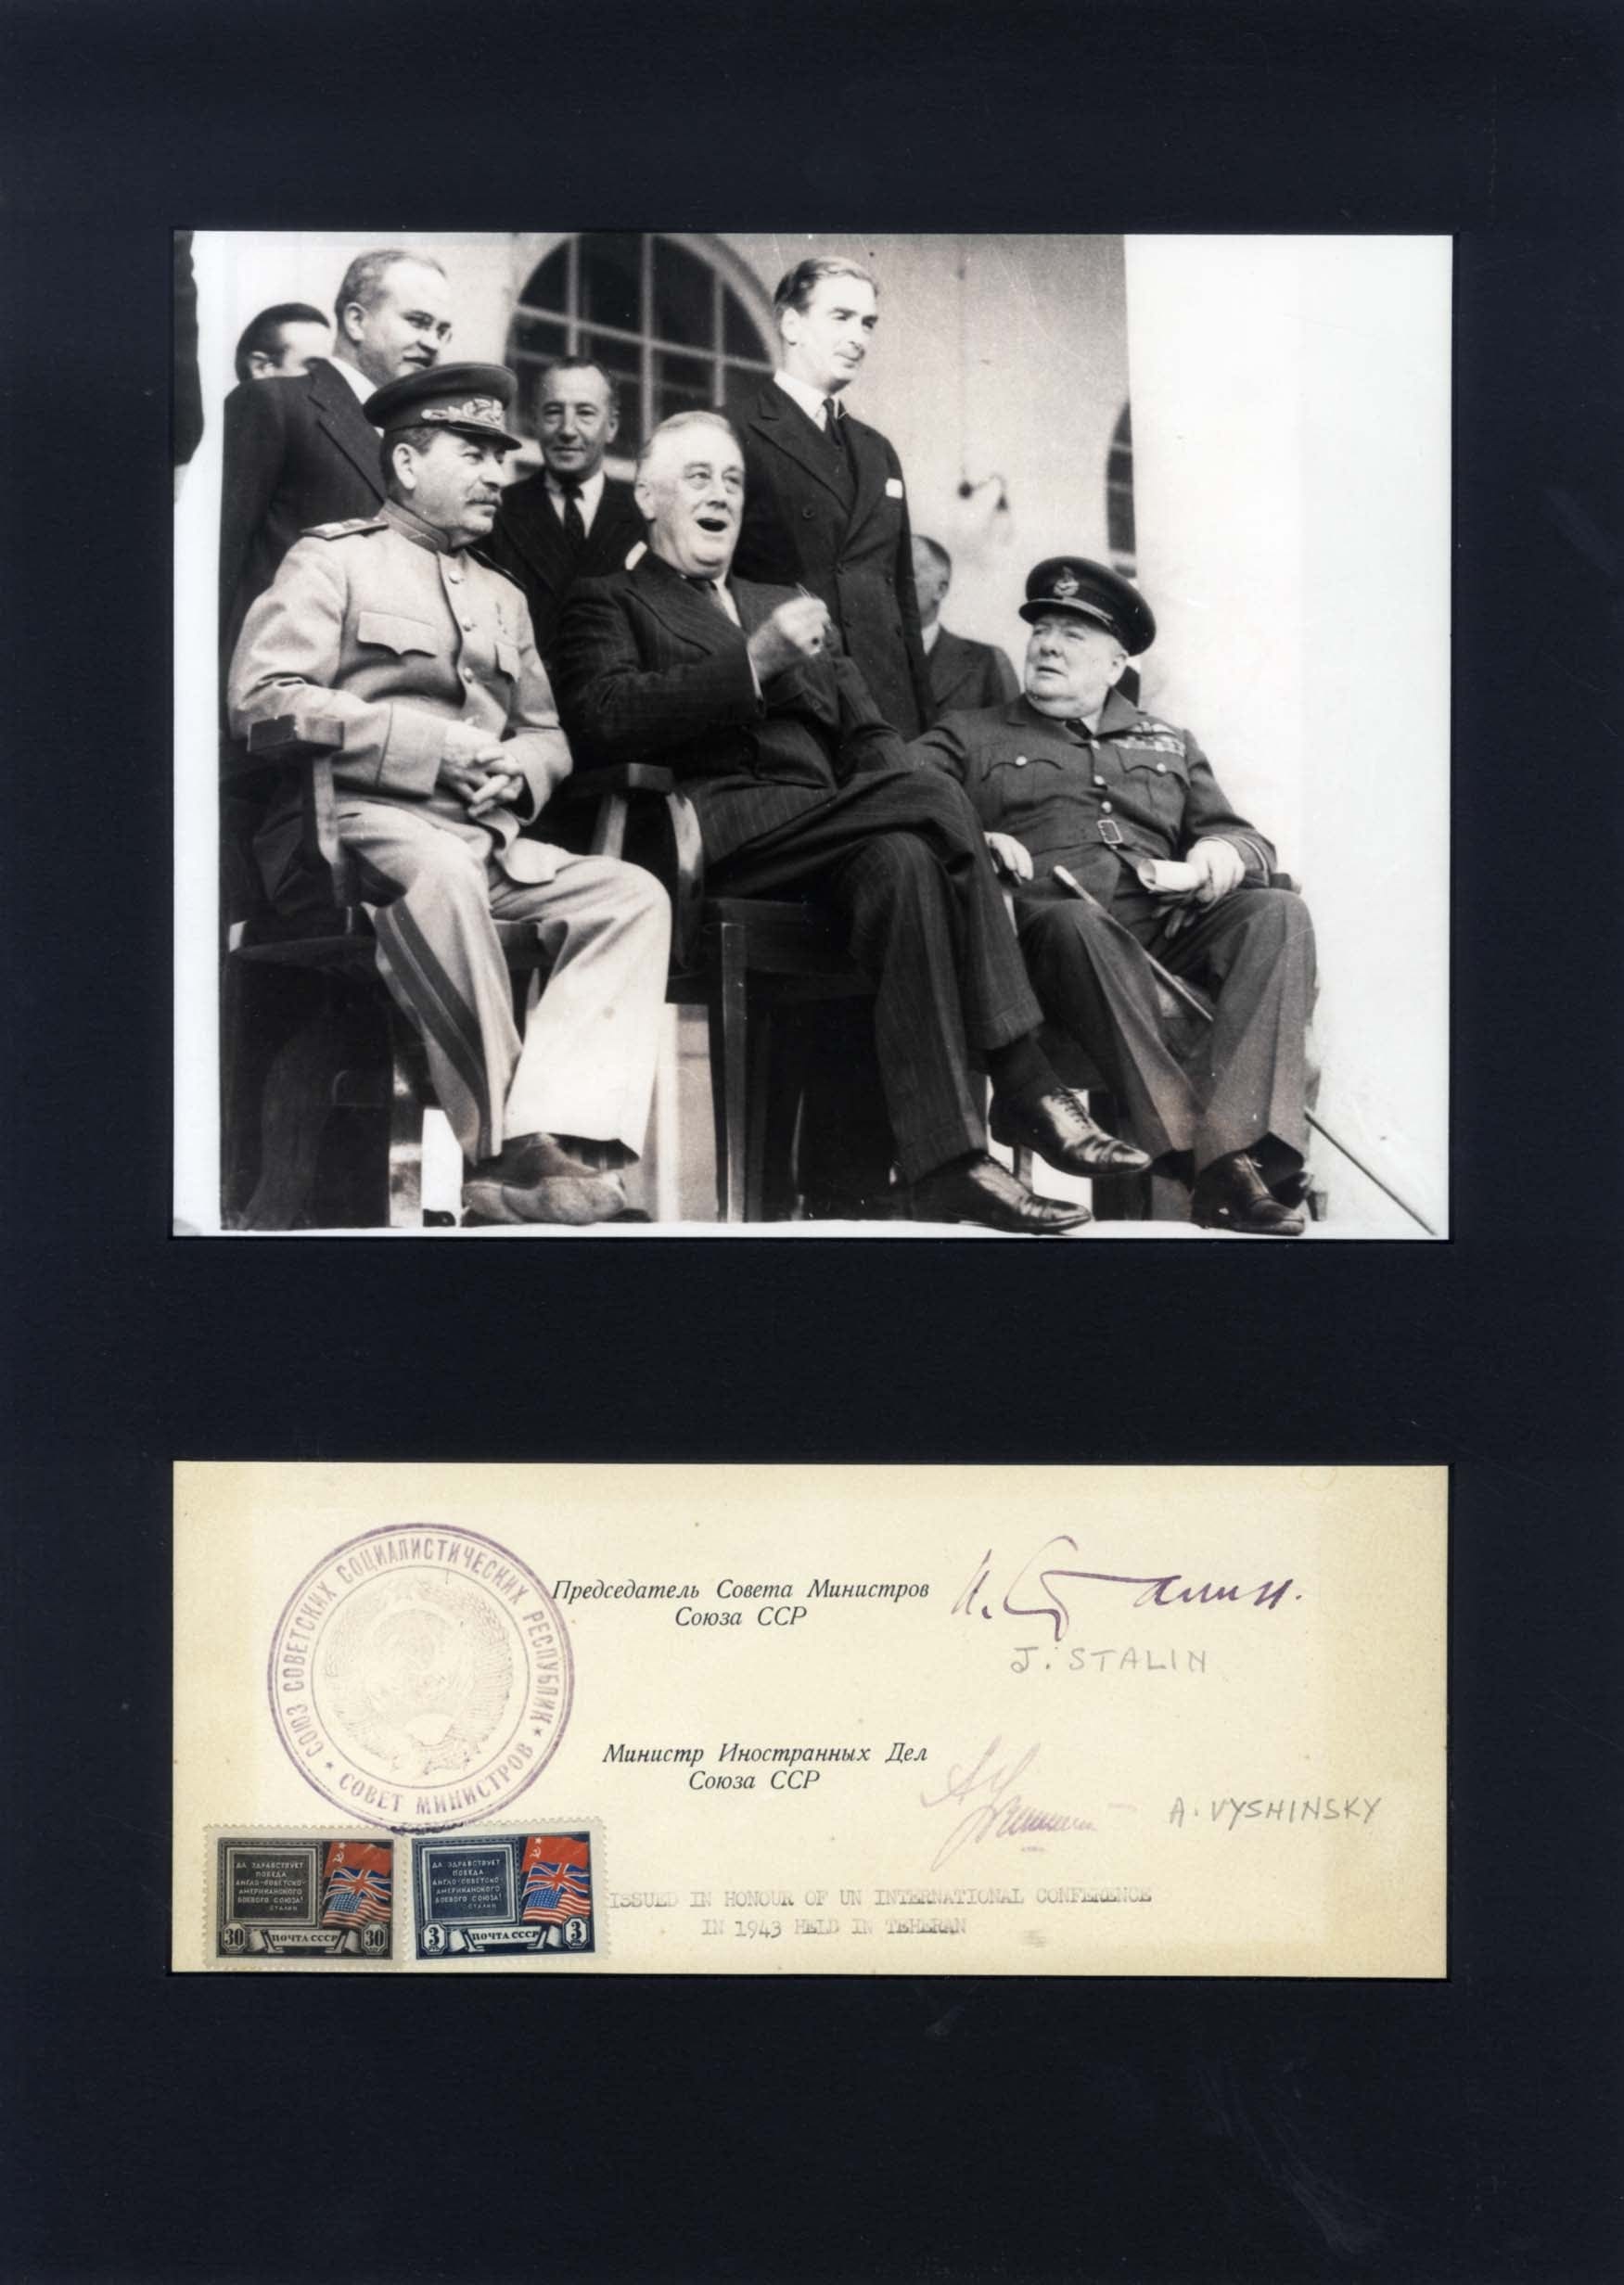 Joseph Stalin Autograph Autogramm | ID 8252361048213